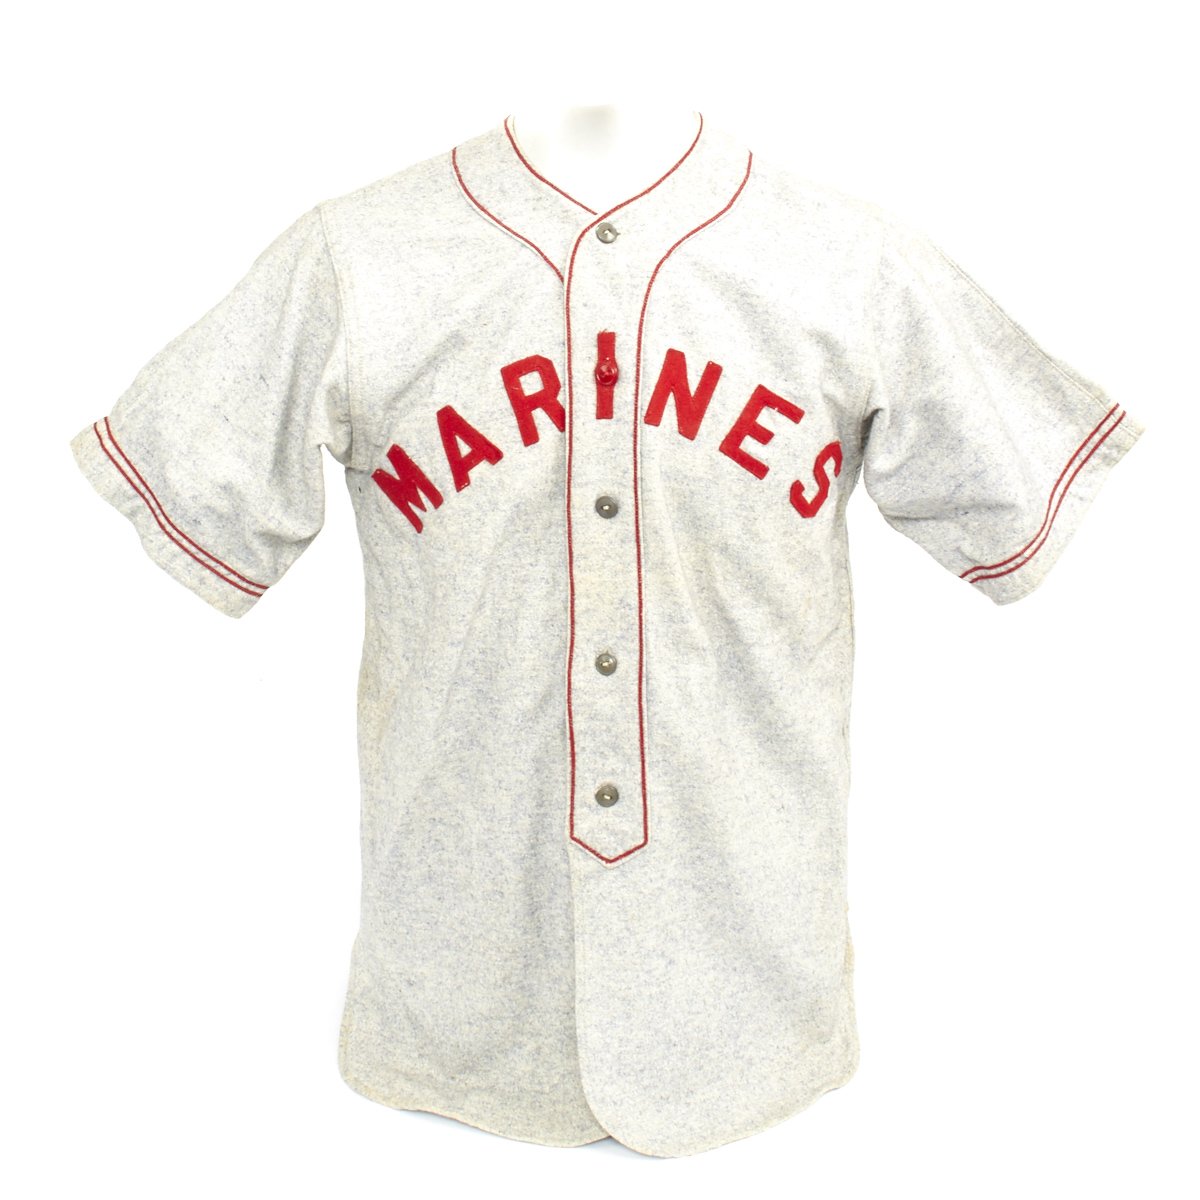 marine corps baseball jersey